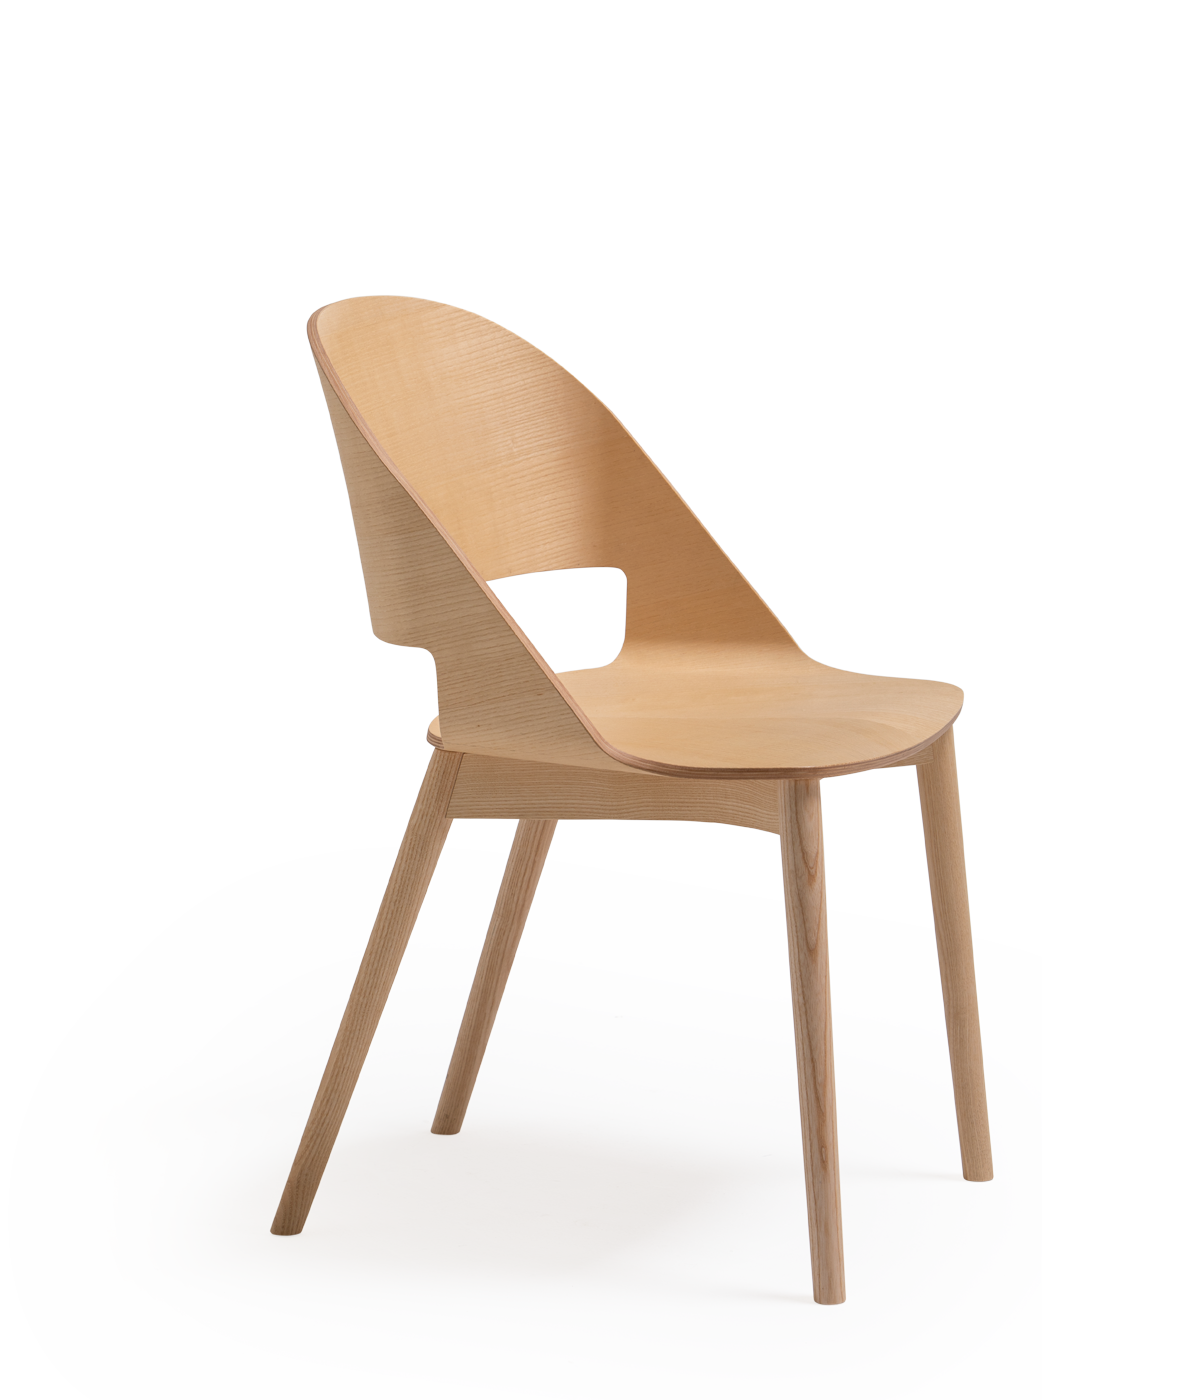 Vergés - Goose chair Model C with wooden legs